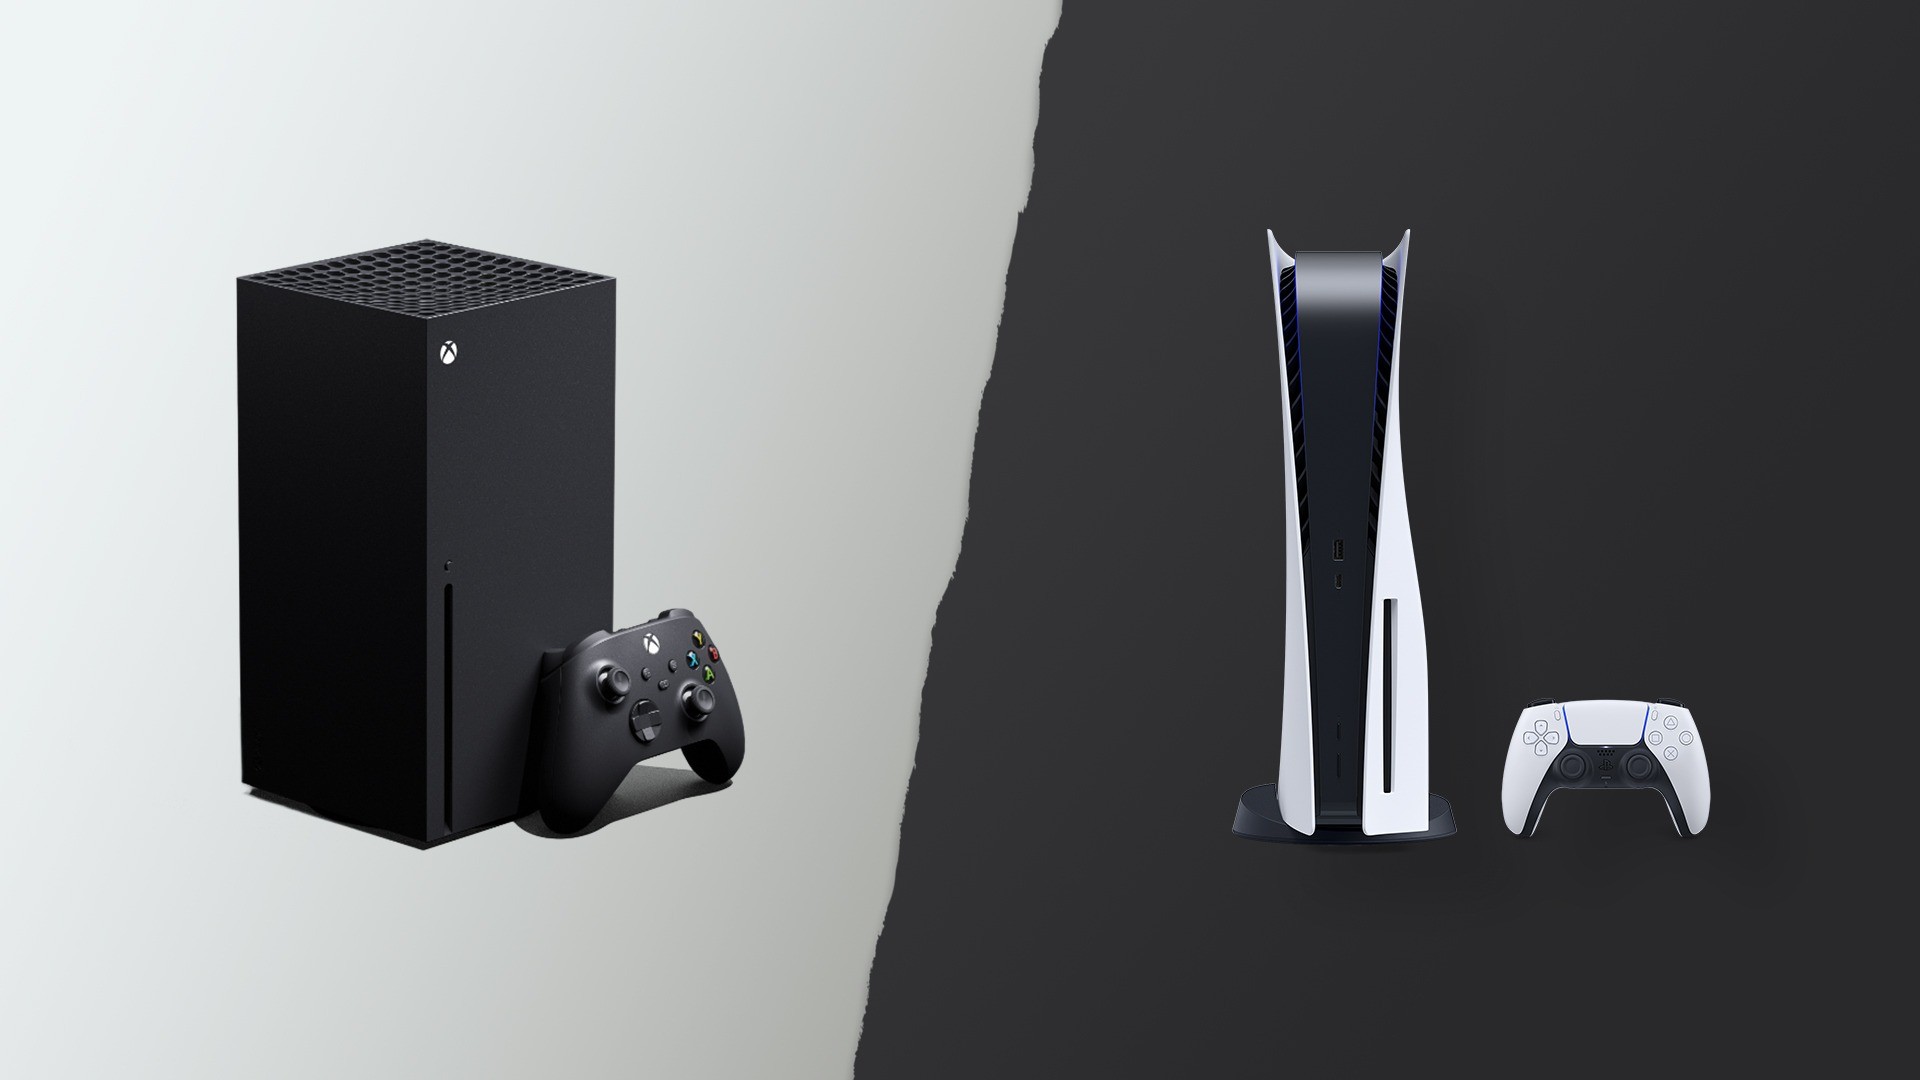 Halo, Fifa 22, Minecraft: games para Xbox e PS5 com desconto na